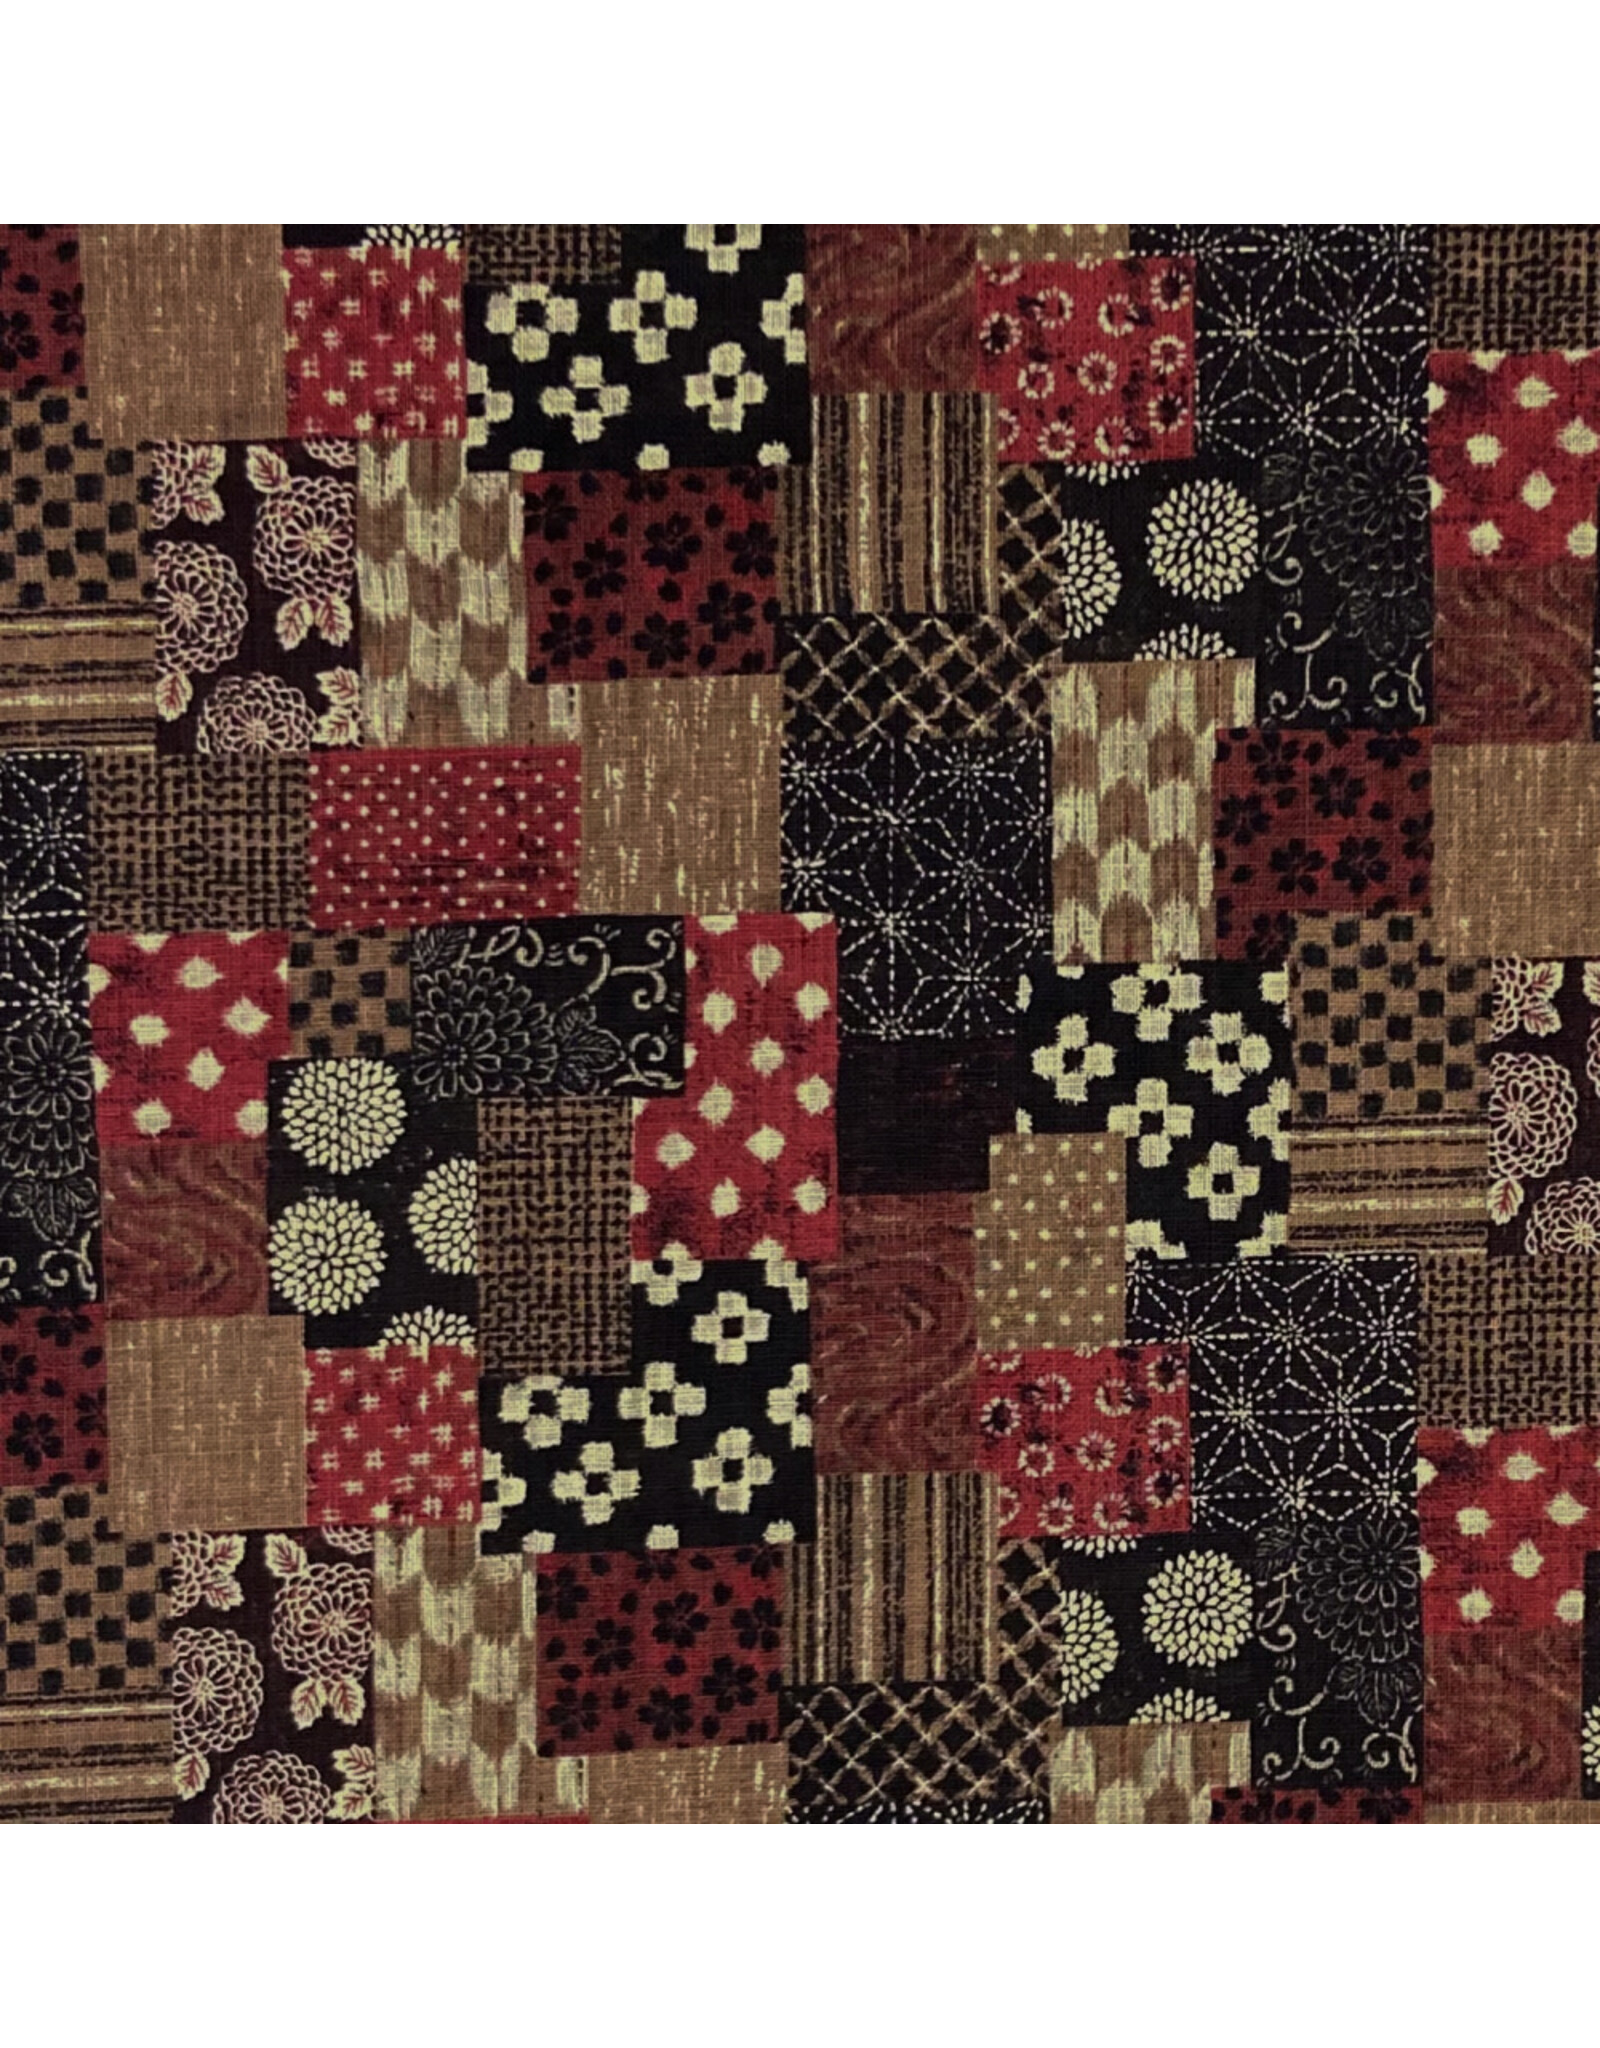 Sevenberry Nara Homespun, Faux-Boro in Red & Black, Fabric Half-Yards